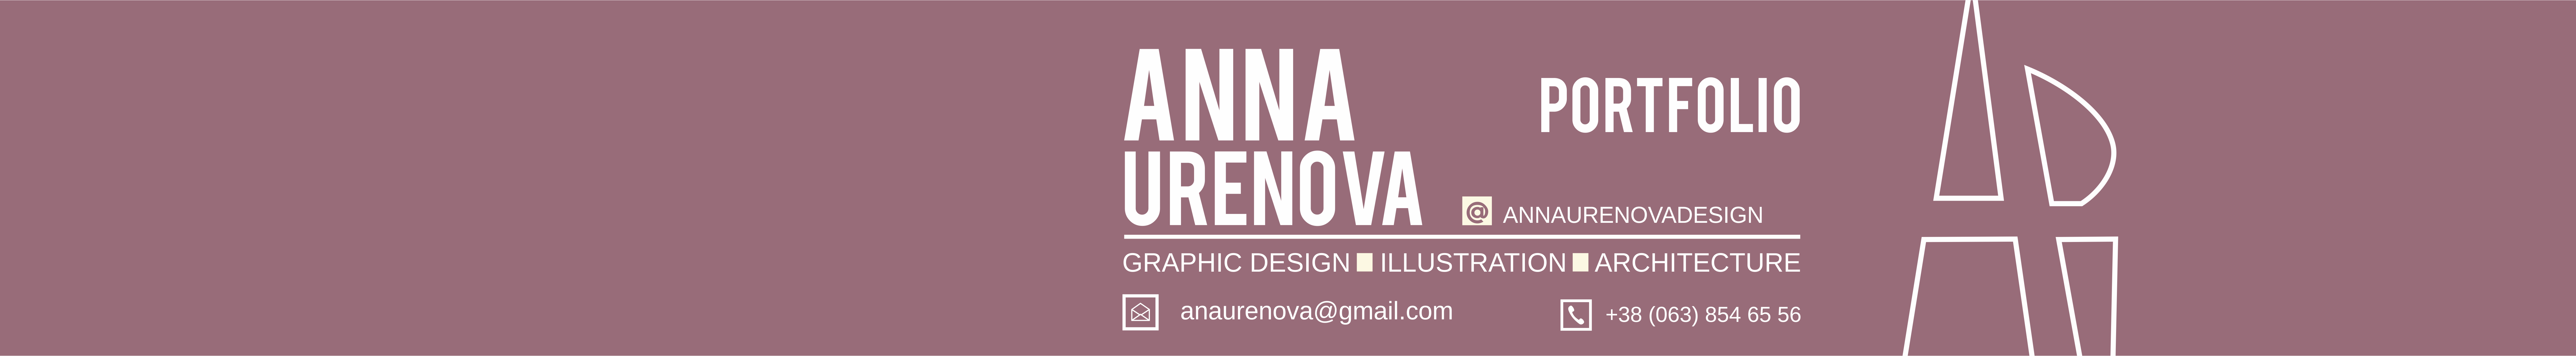 Anna Ureñova's profile banner